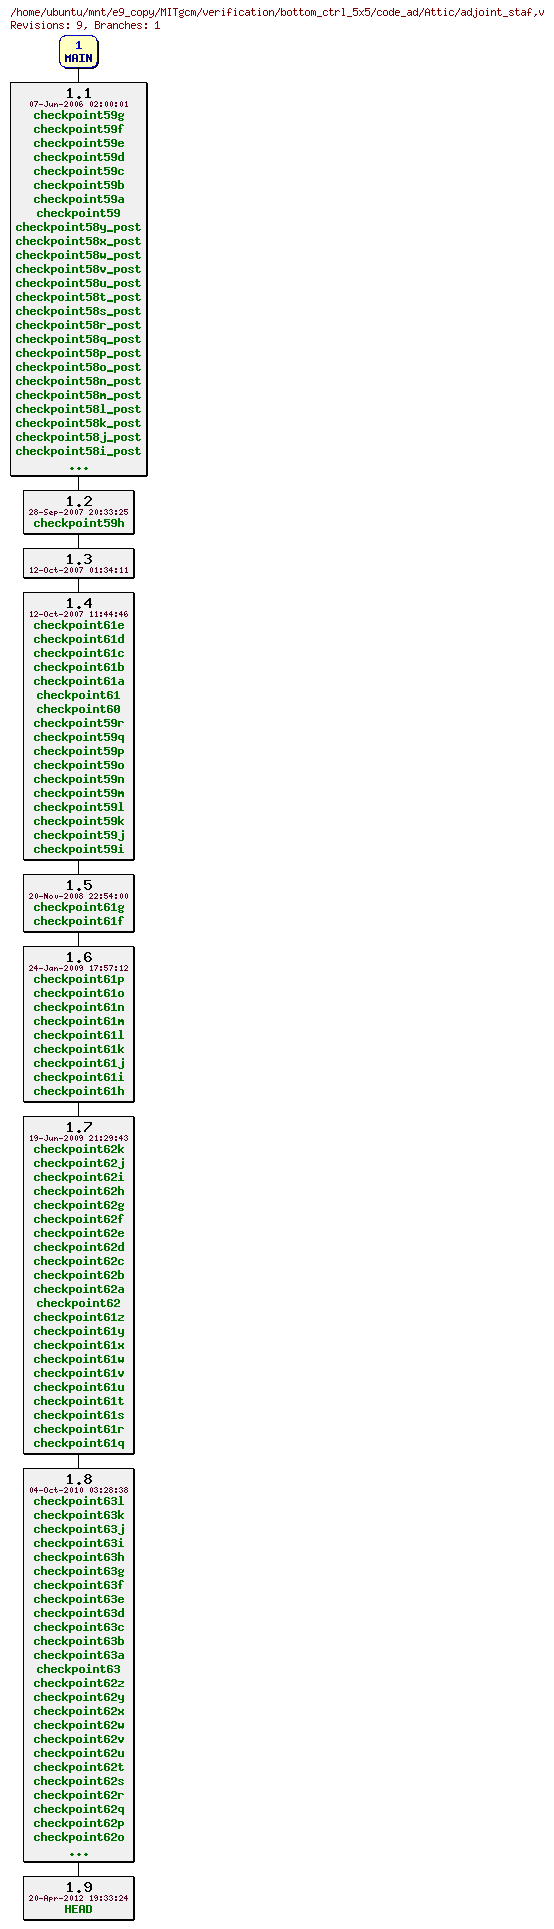 Revisions of MITgcm/verification/bottom_ctrl_5x5/code_ad/adjoint_staf